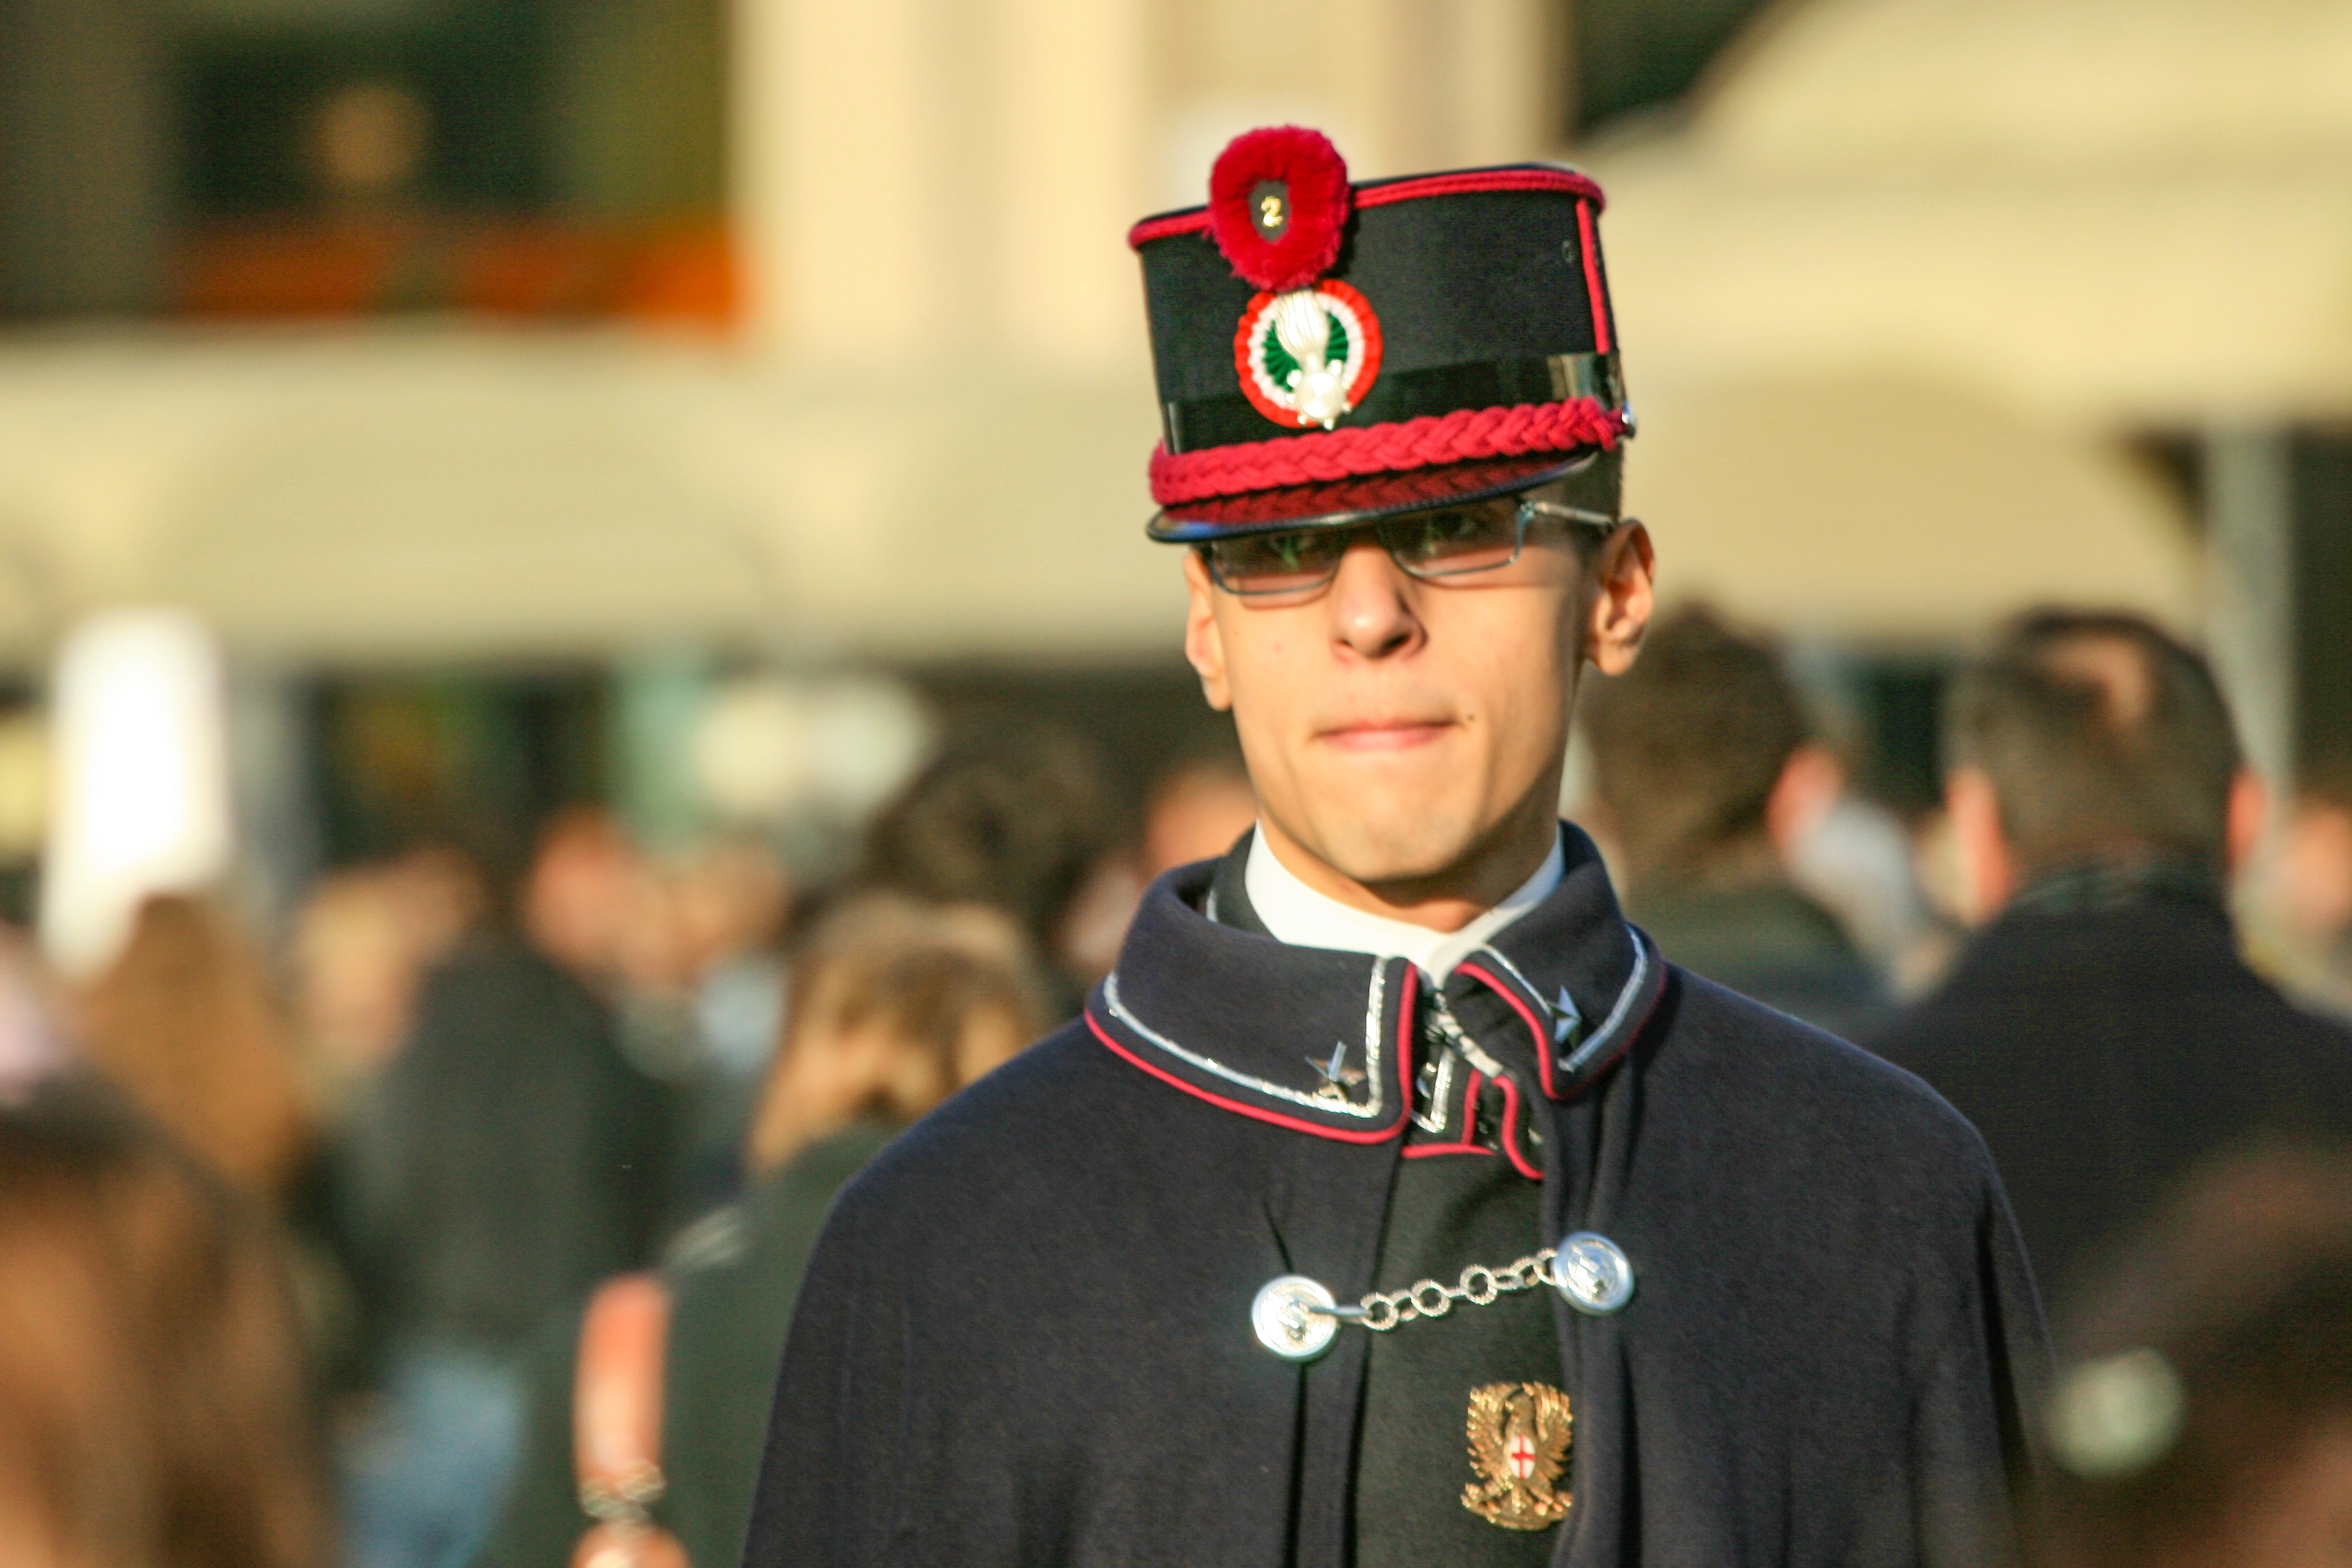 ../../_images/fotocapito-20080229-young-carabinieri.jpg